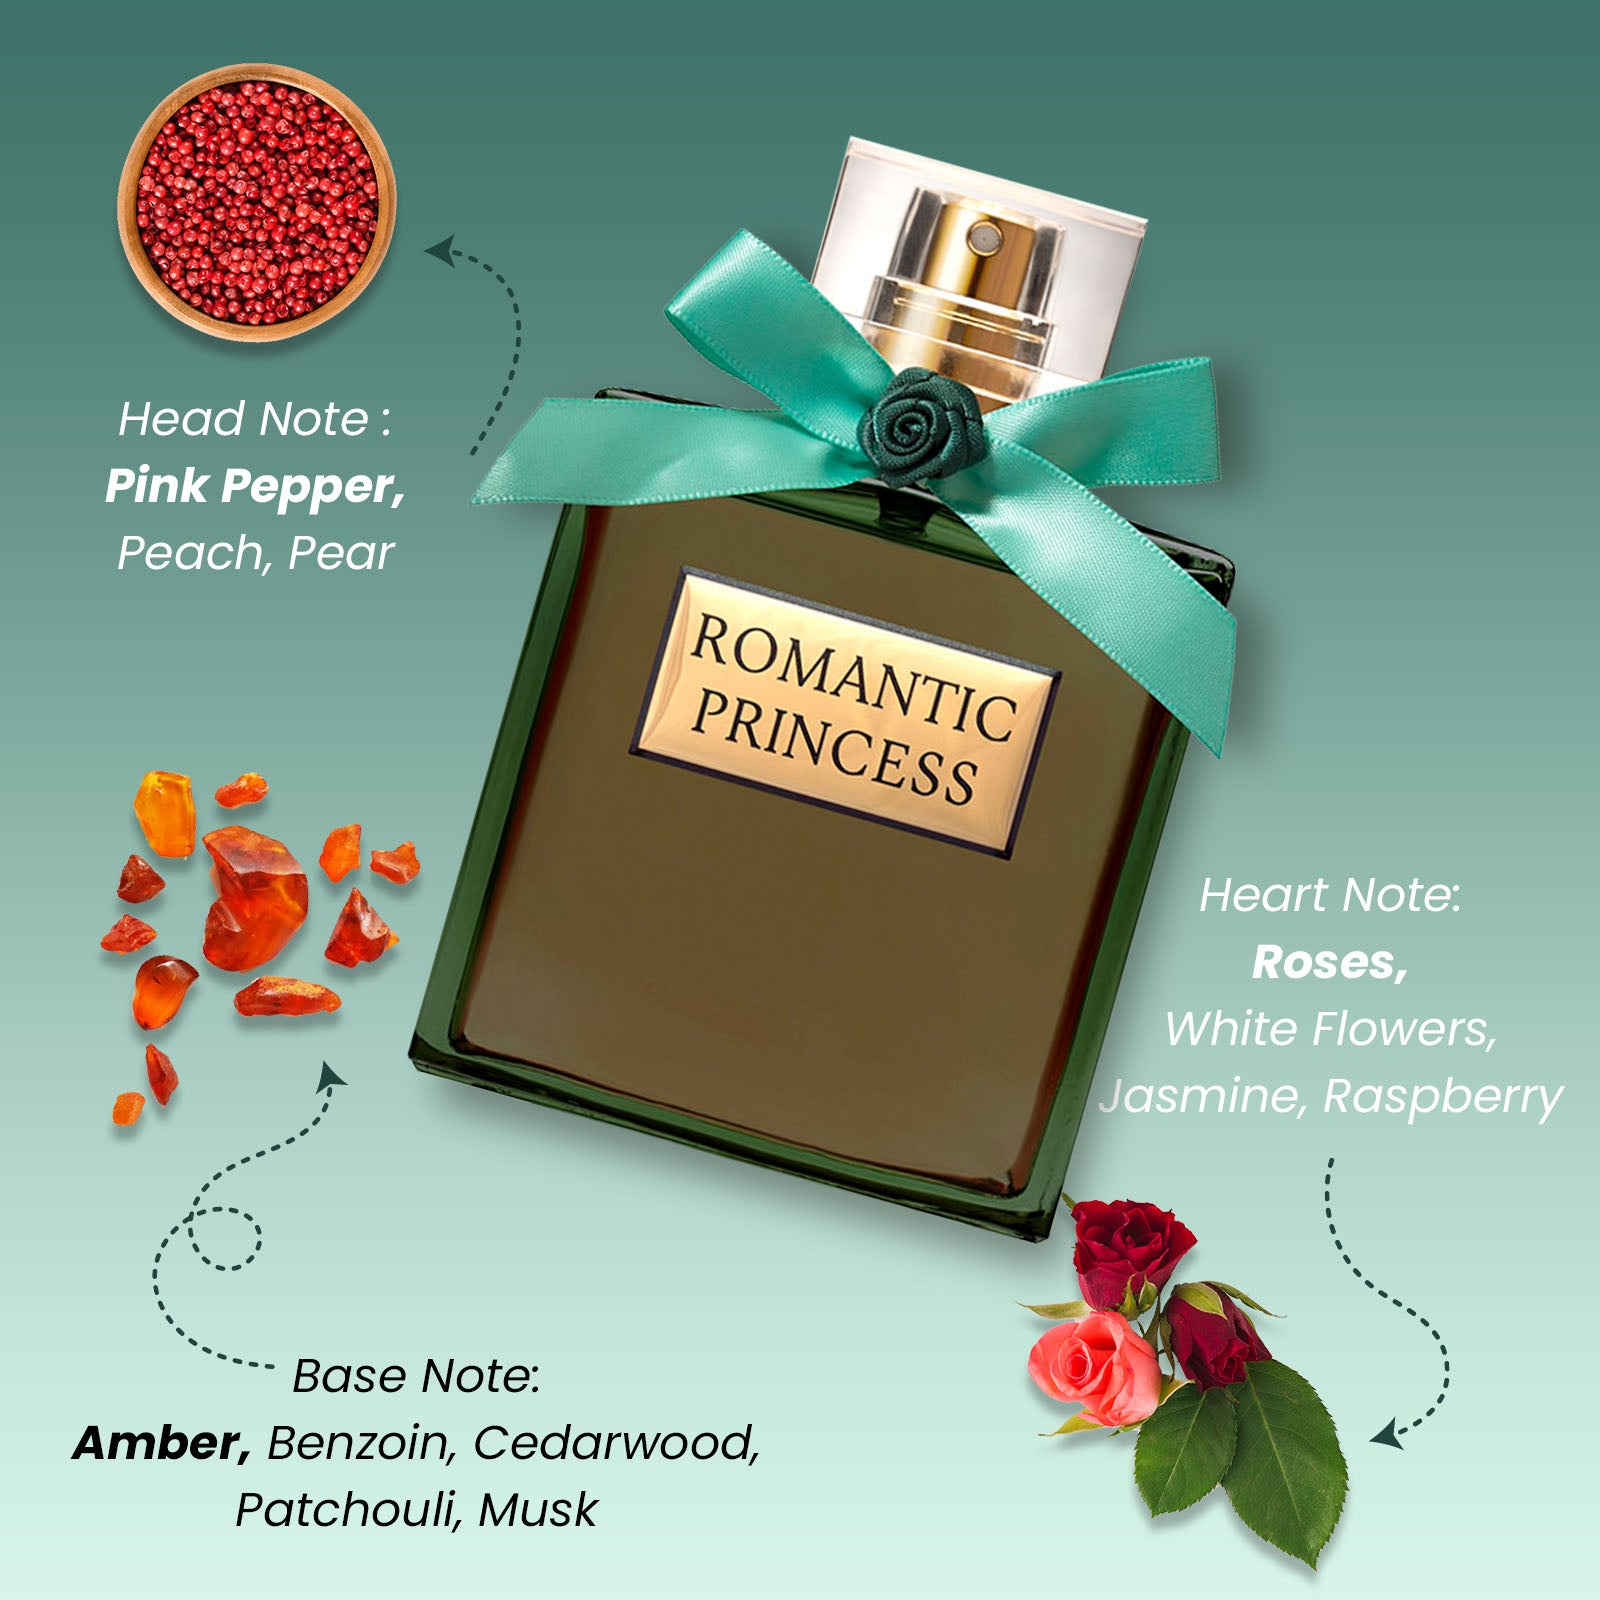 Romantic Princess Perfume For Women 100ml